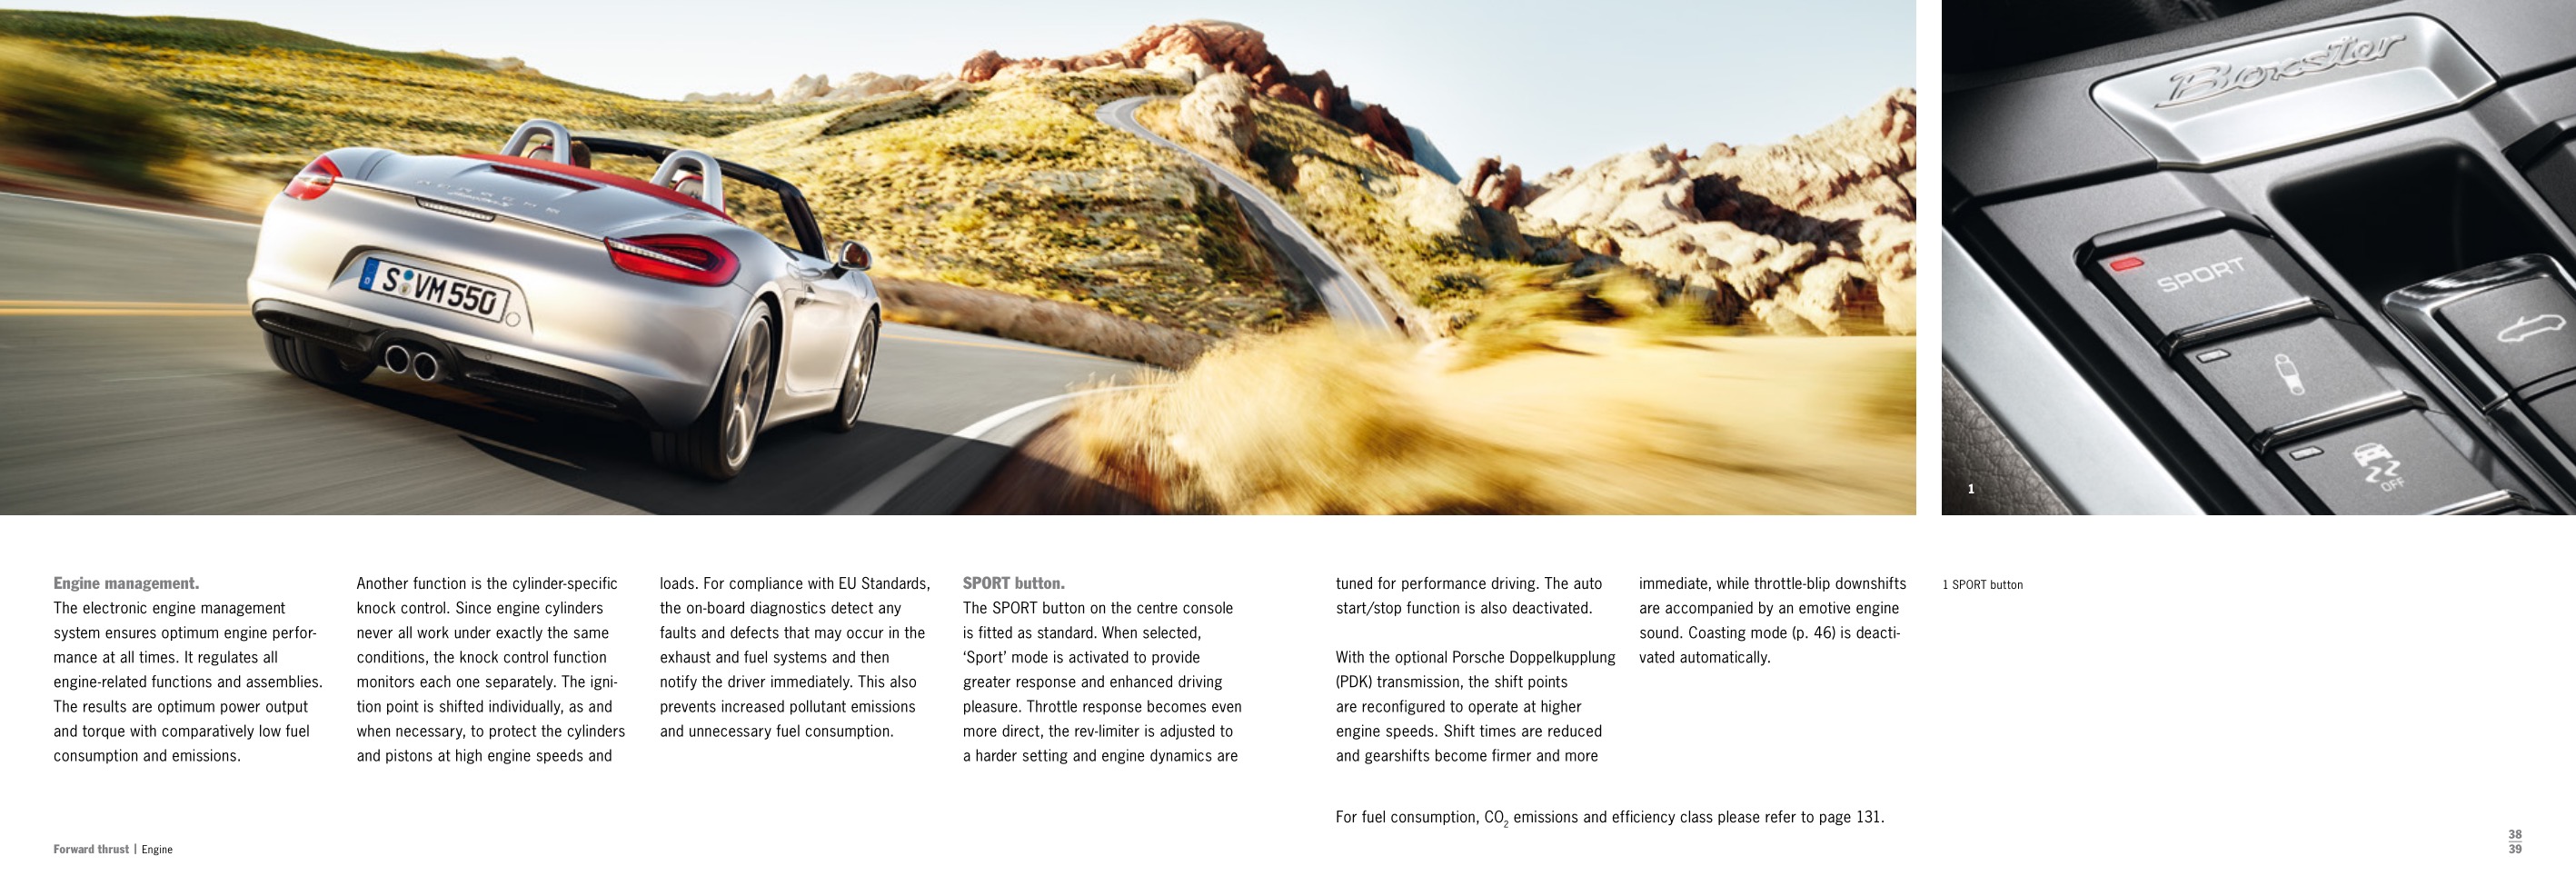 2013 Porsche Boxster Brochure Page 7